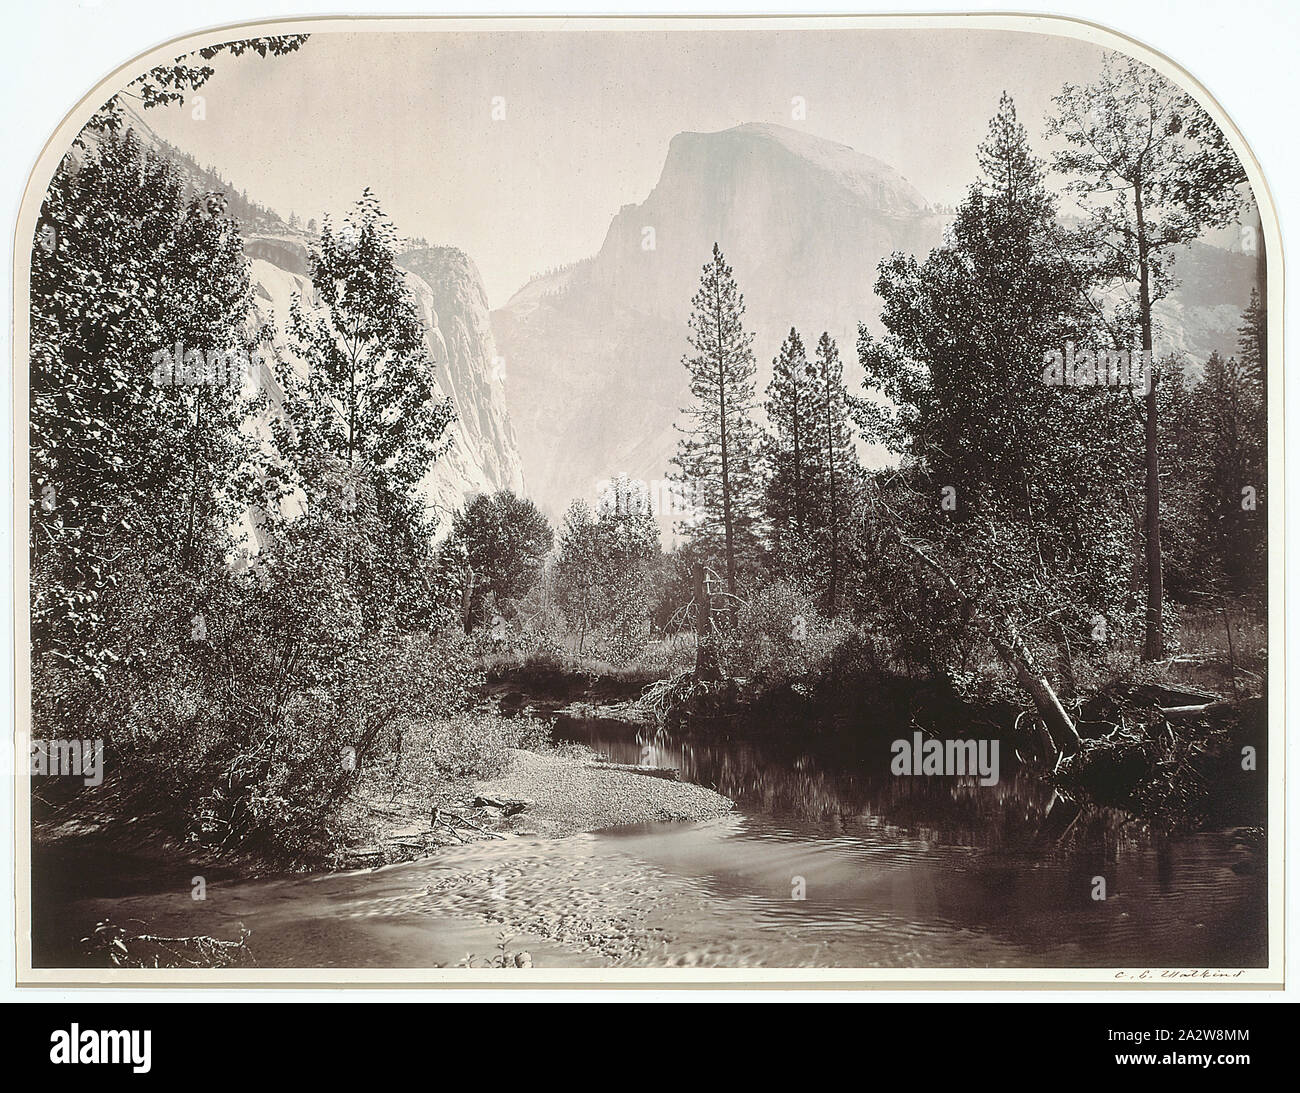 Taysayac, Half Dome, 4967 Ft., Yosemite, Carleton Emmons Watkins (American, 1829-1916), 1861, mammoth plate albumen print, 15-3/8 x 20-3/8 in. (image) 21 x 27 in.(sheet), signed in ink,on mount, L.R.: C.E. Watkins; inscribed in pencil, on mount, L.R.: CEW 191X Tasayac - Half Dome - 4967 ft - Yosemite Stock Photo